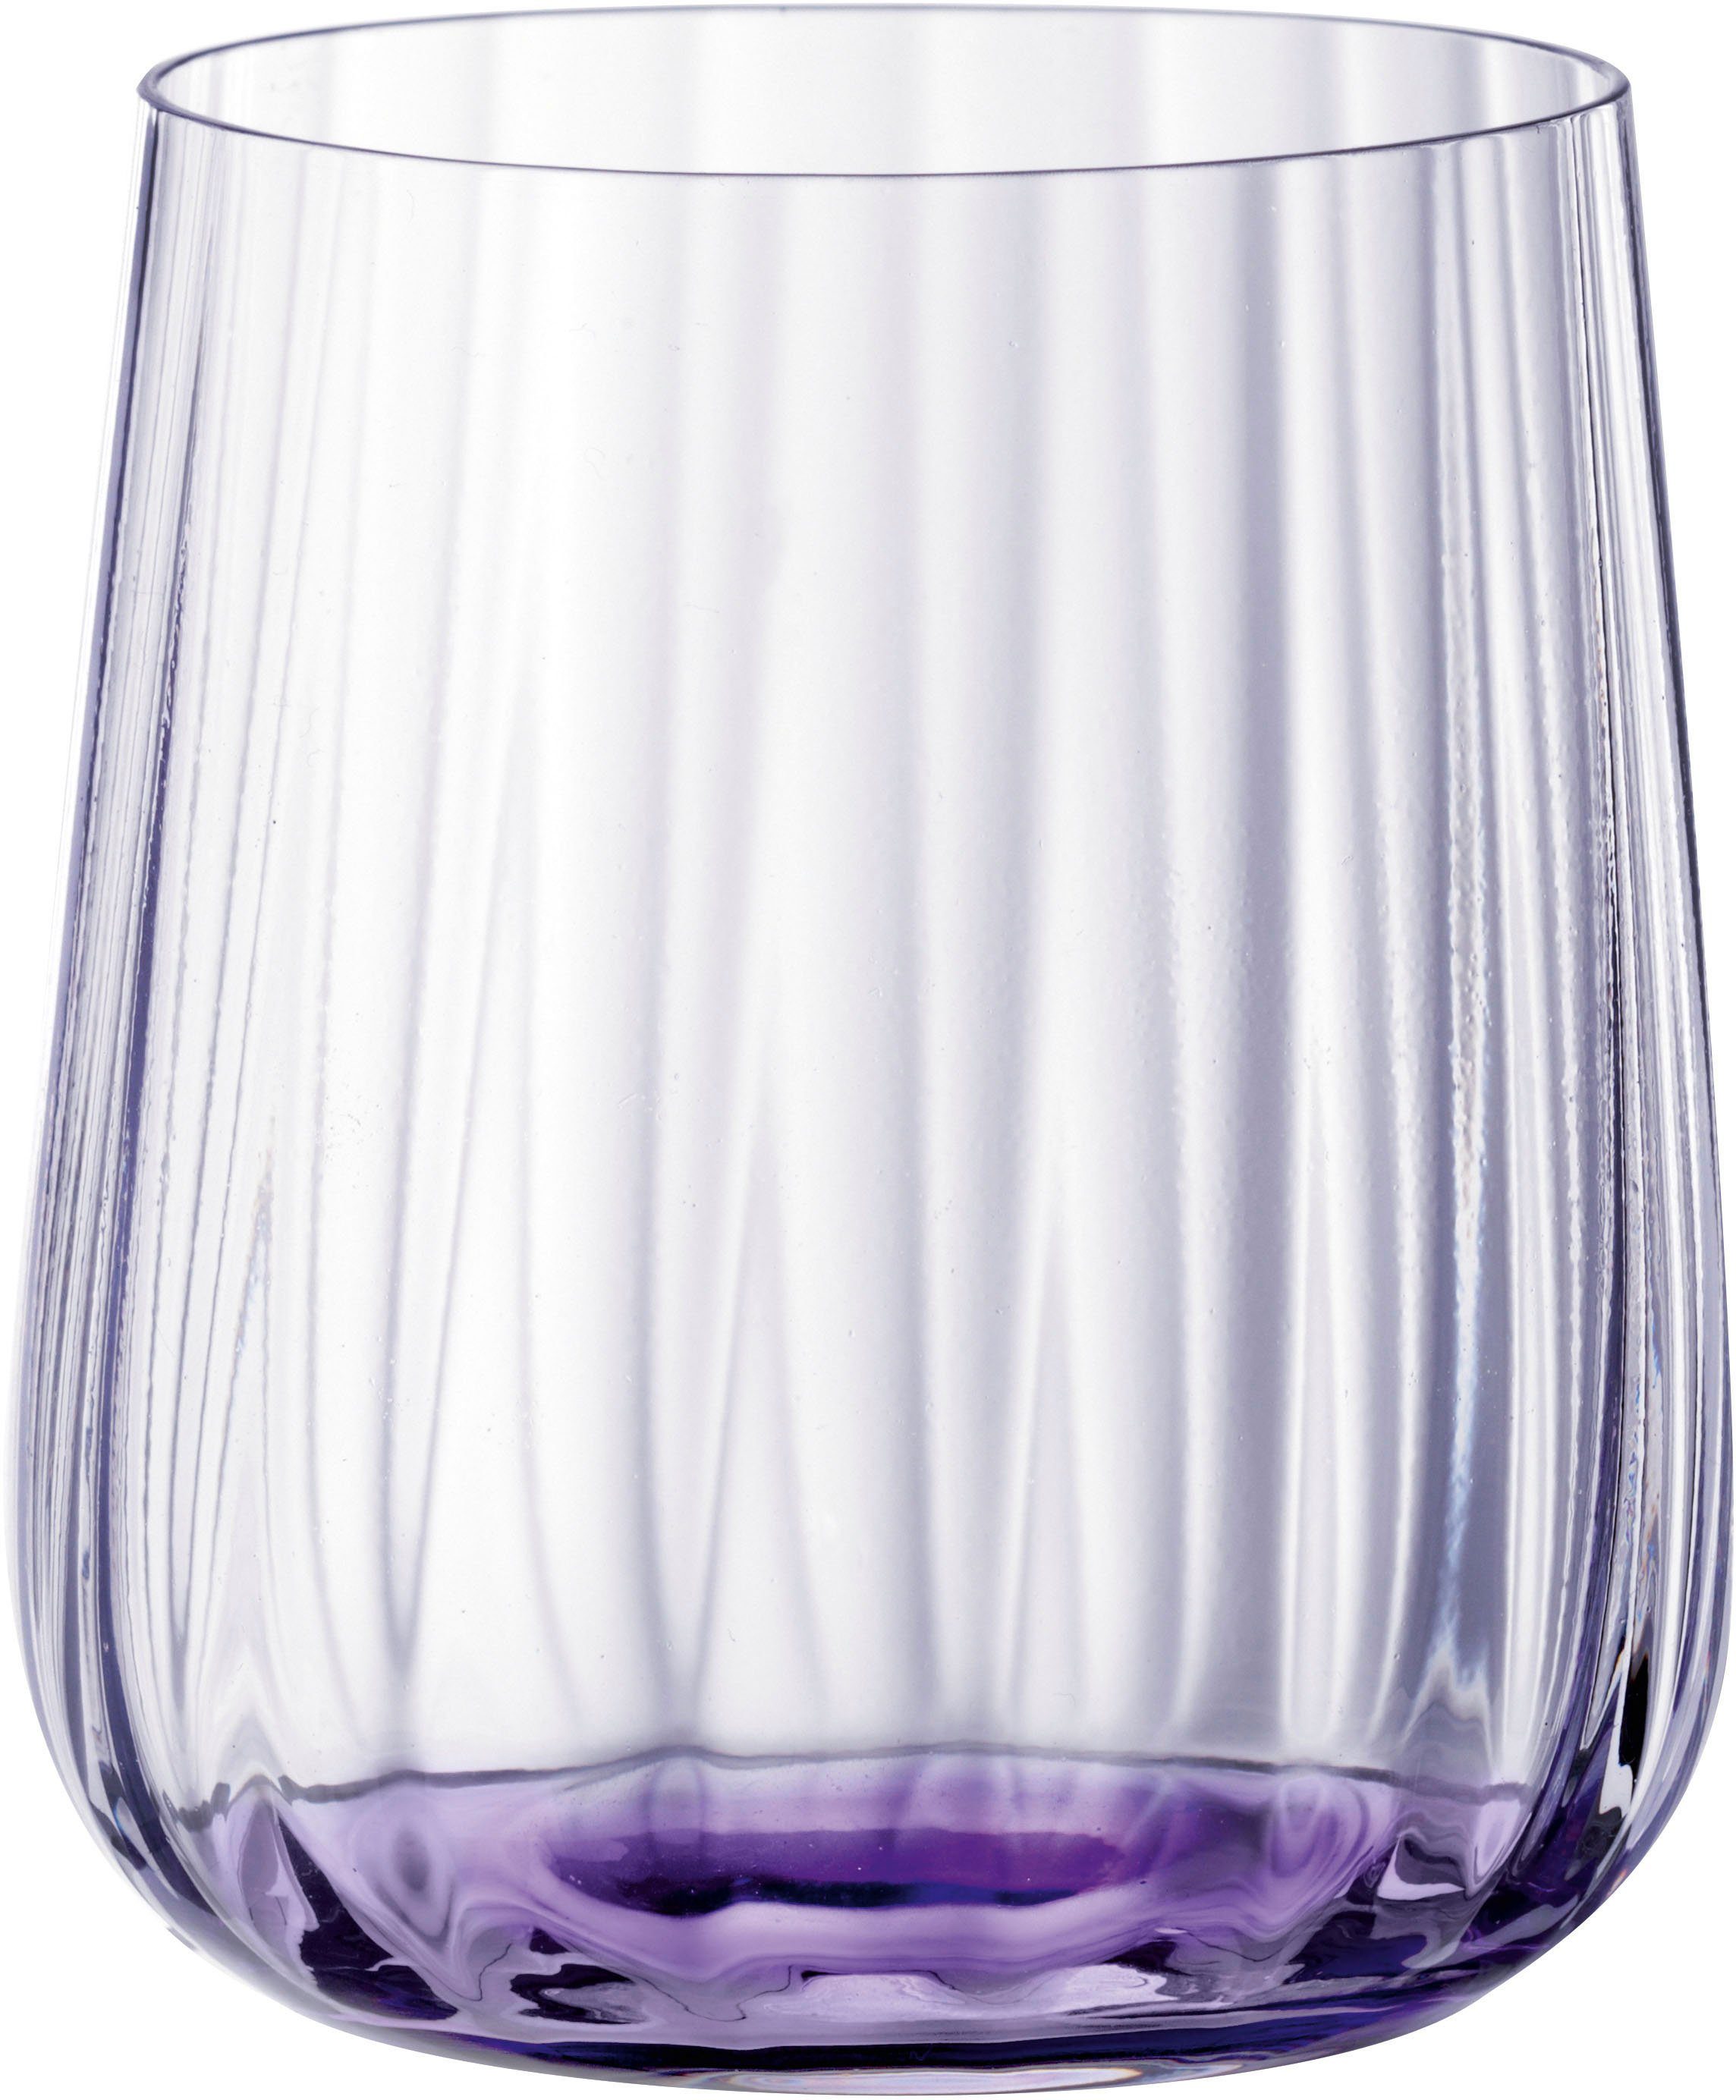 SPIEGELAU Becher lilac LifeStyle, Kristallglas, 2-teilig ml, 340